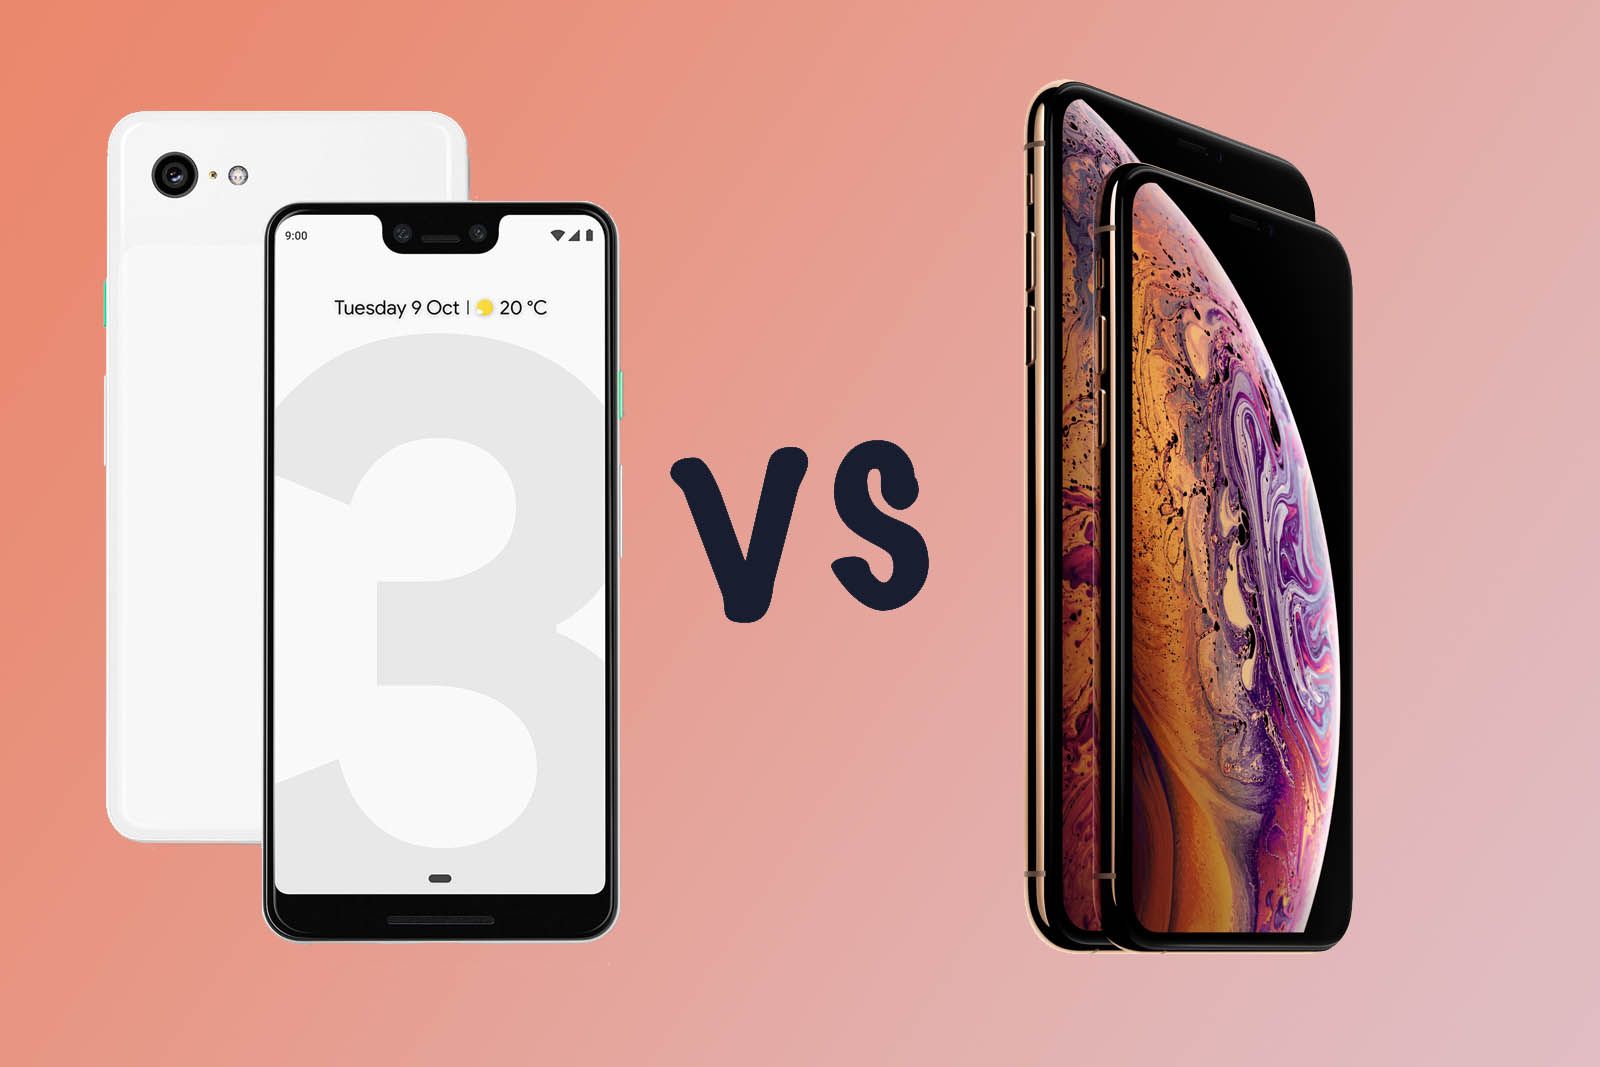 Pixel 3 vs 3 XL vs iPhone XS vs iPhone XS Max Google or Apple image 1